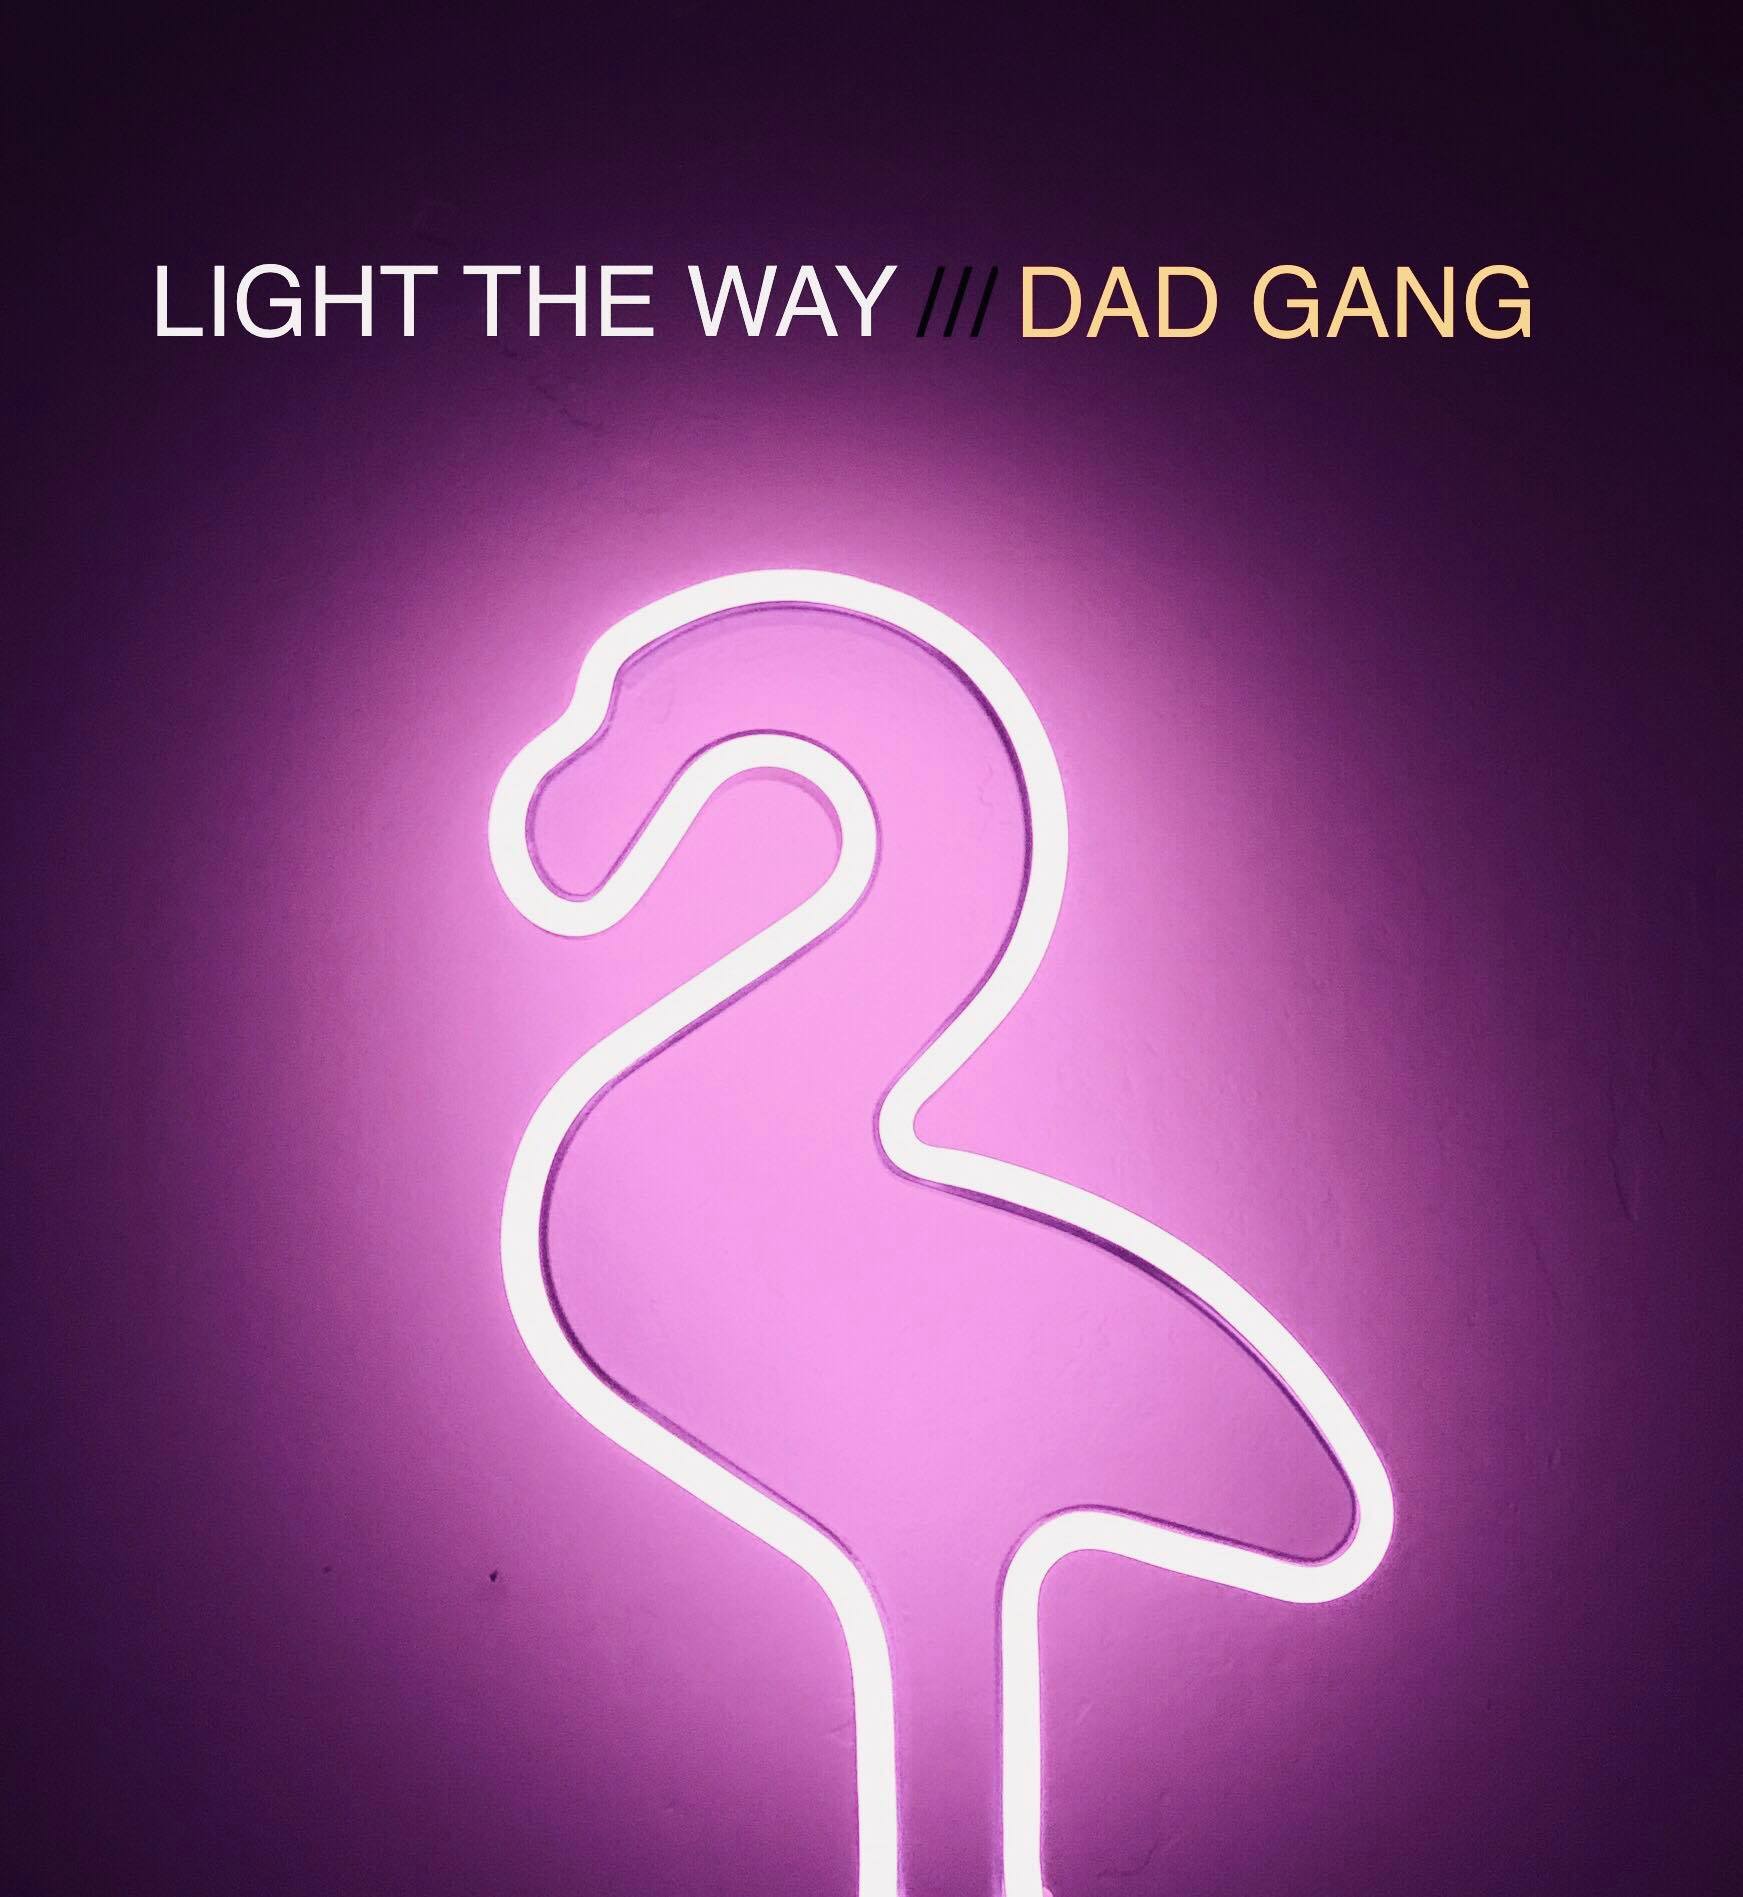 Лайт музыка слушать. Света the best. Disillusion 2019 the Liberation. By the way альбом. Light way Daddy.